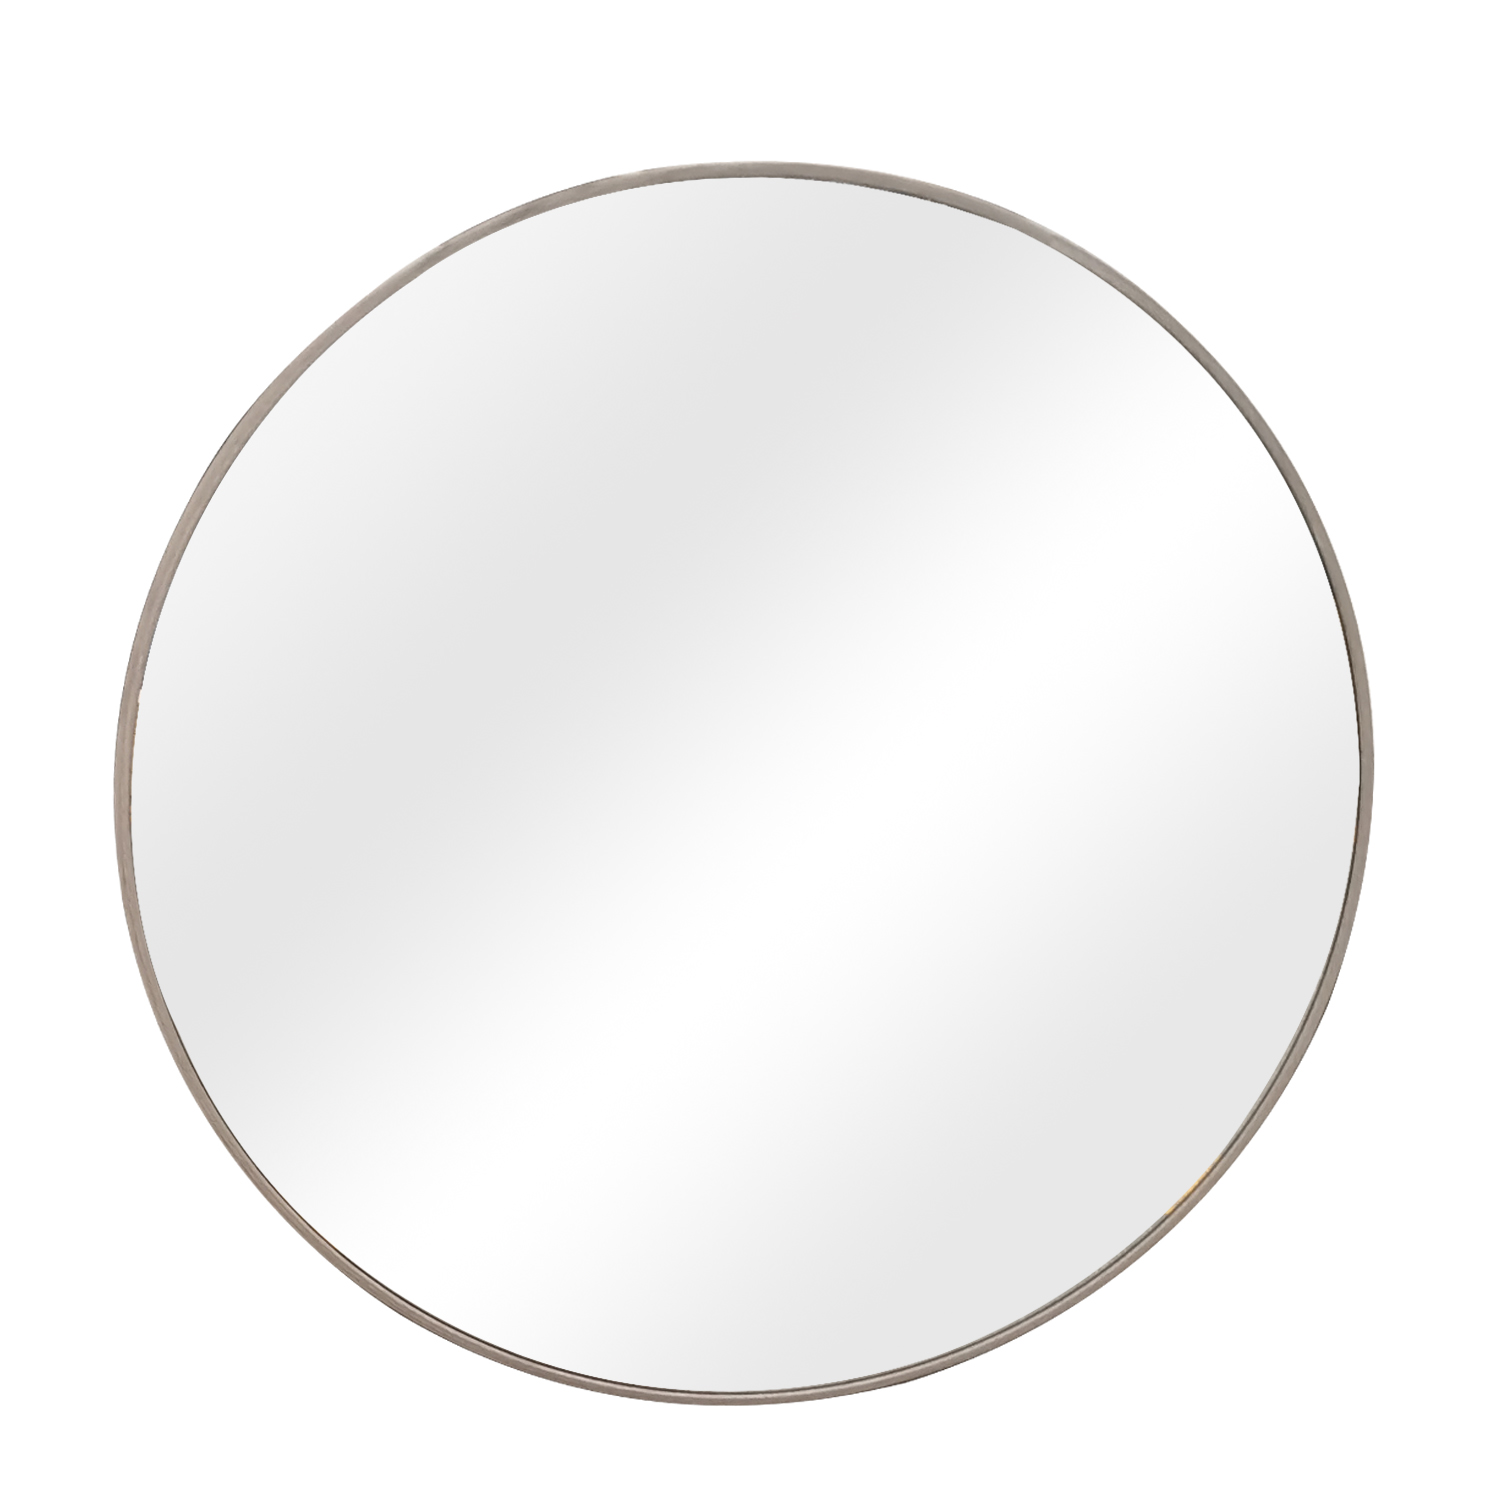 Mainstays 28" Round Aluminum Wall Mirror, Rustic Gray Wood - image 2 of 5